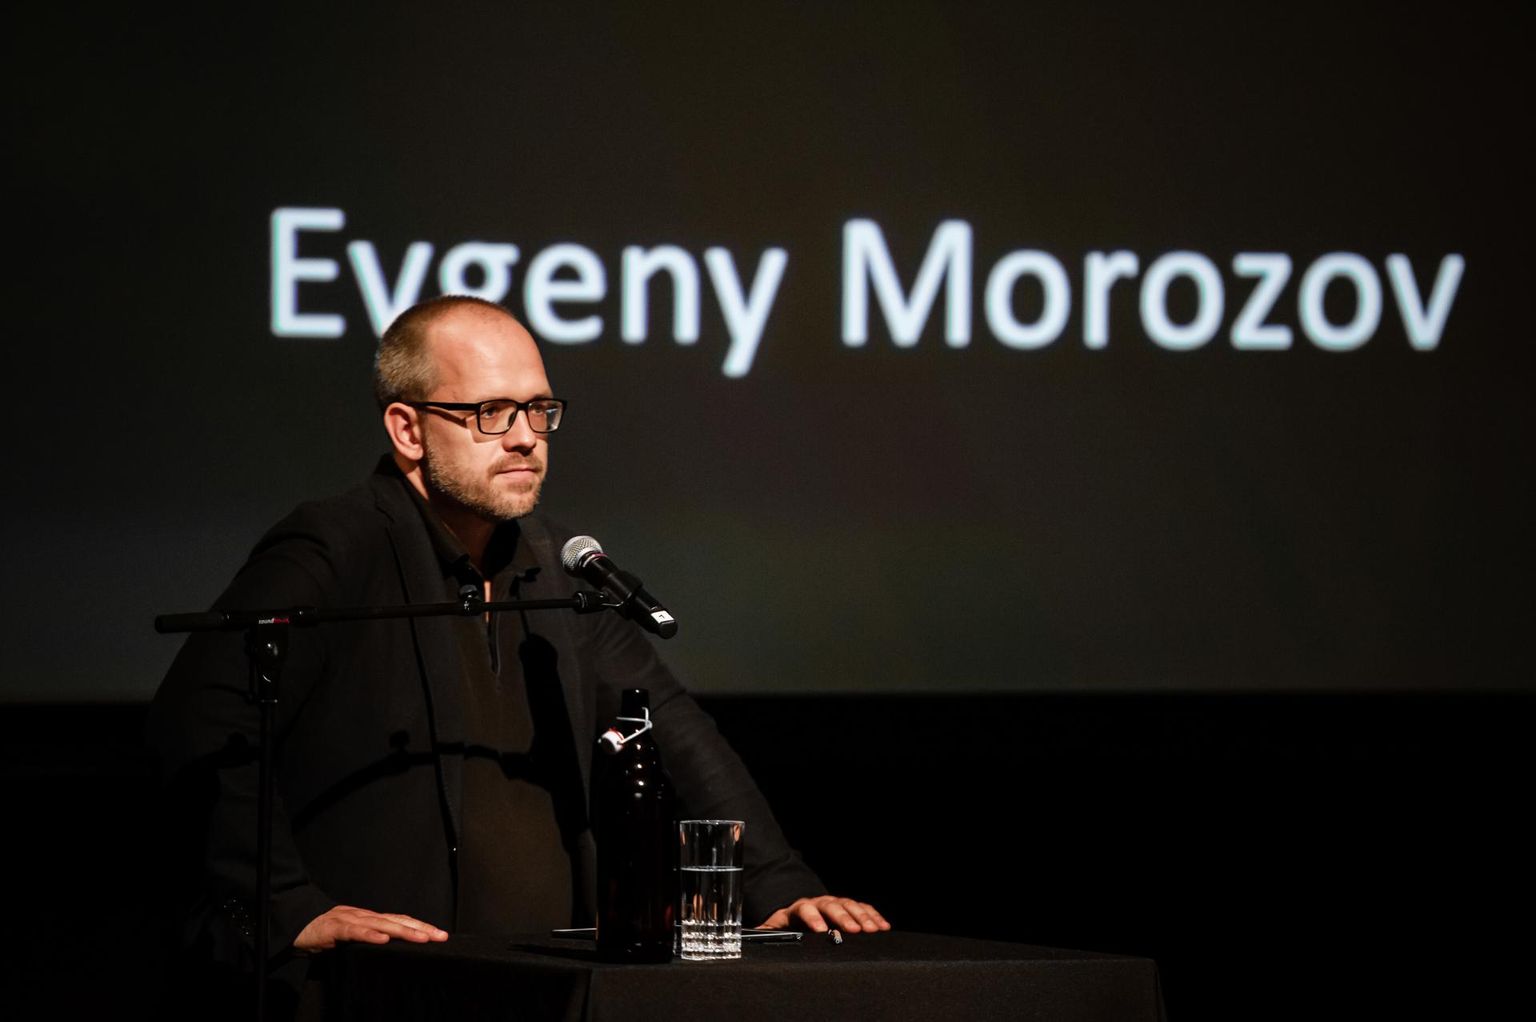 Evgeny Morozov septembri lõpus Tallinnas esinemas.